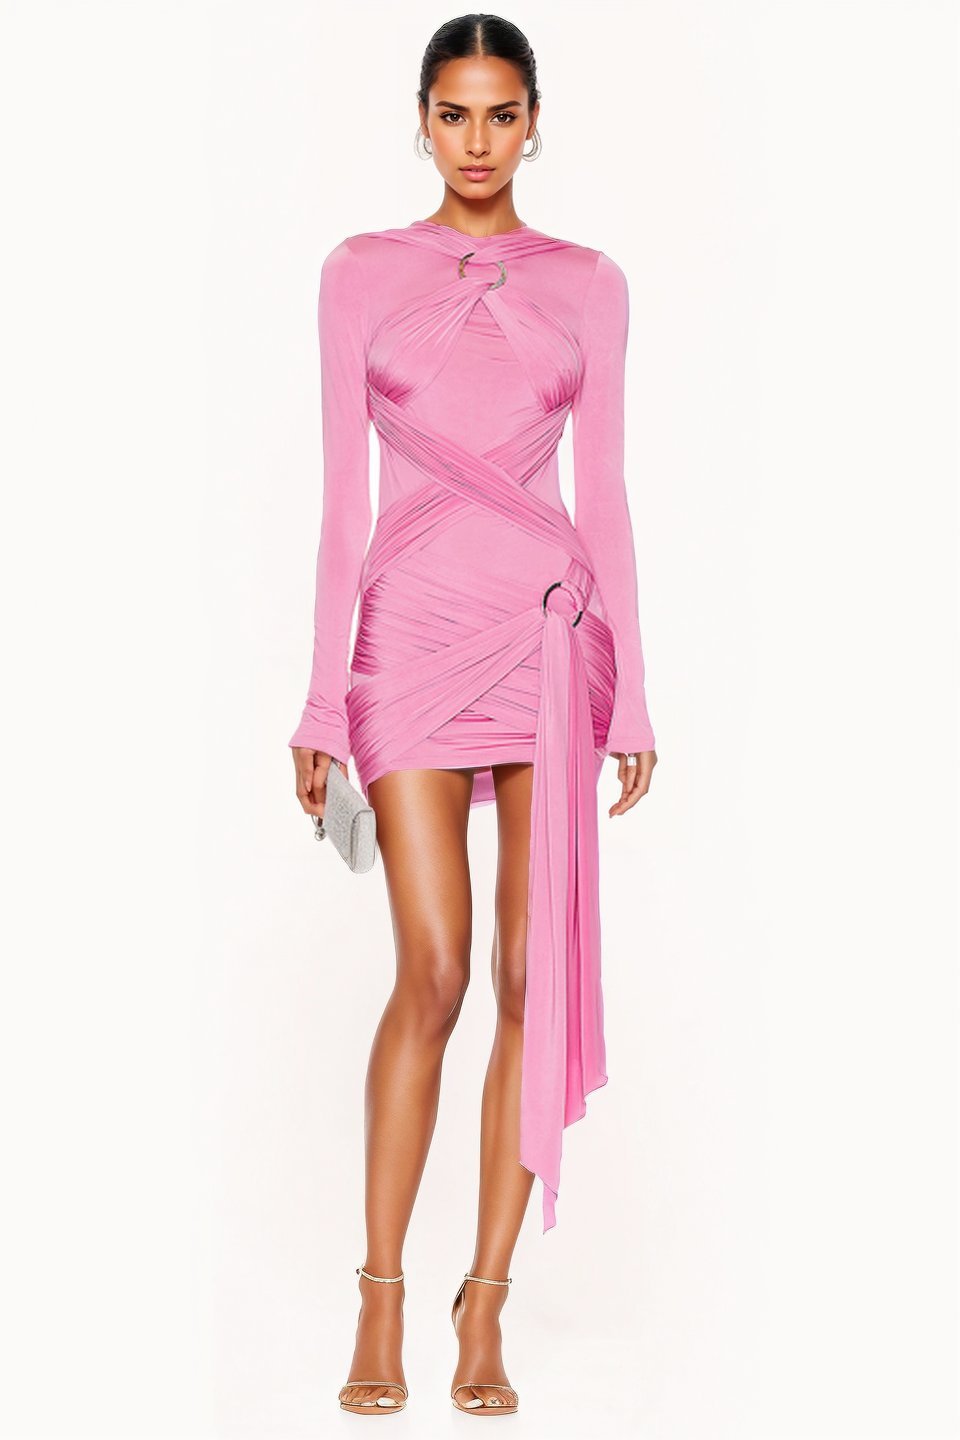 dresses-Odelia Lace-up Strap Mini Dress-SD00211101888-Hot Pink-S - Sunfere